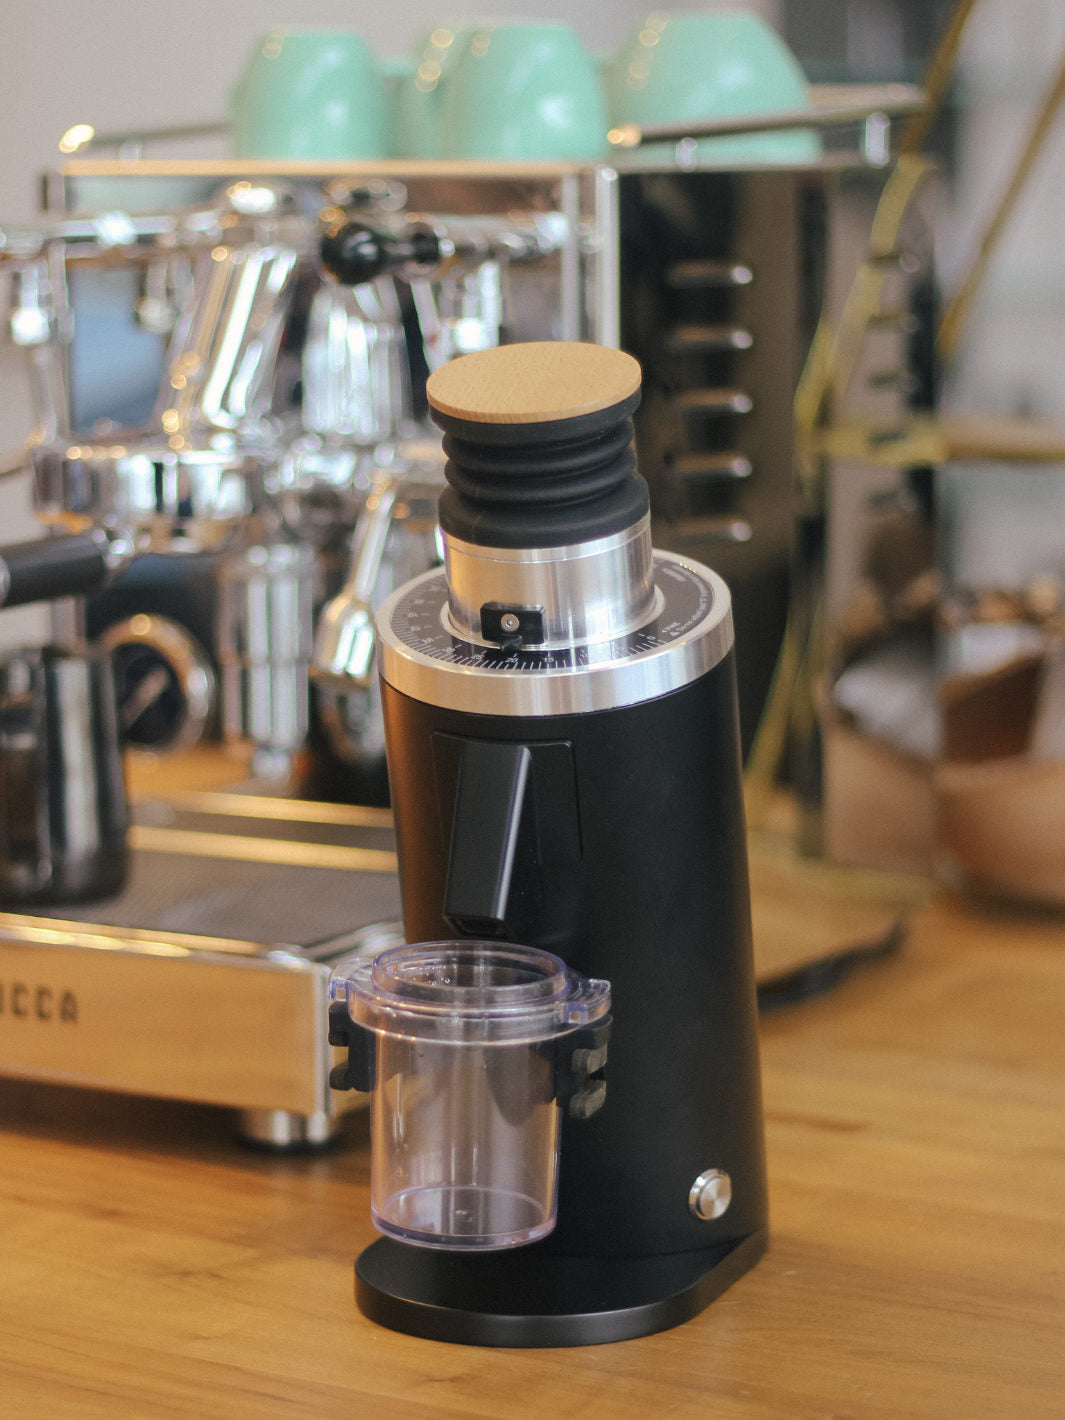 A Black DF 54 All Purpose grinder next to the LUCCA X58 Espresso Machine